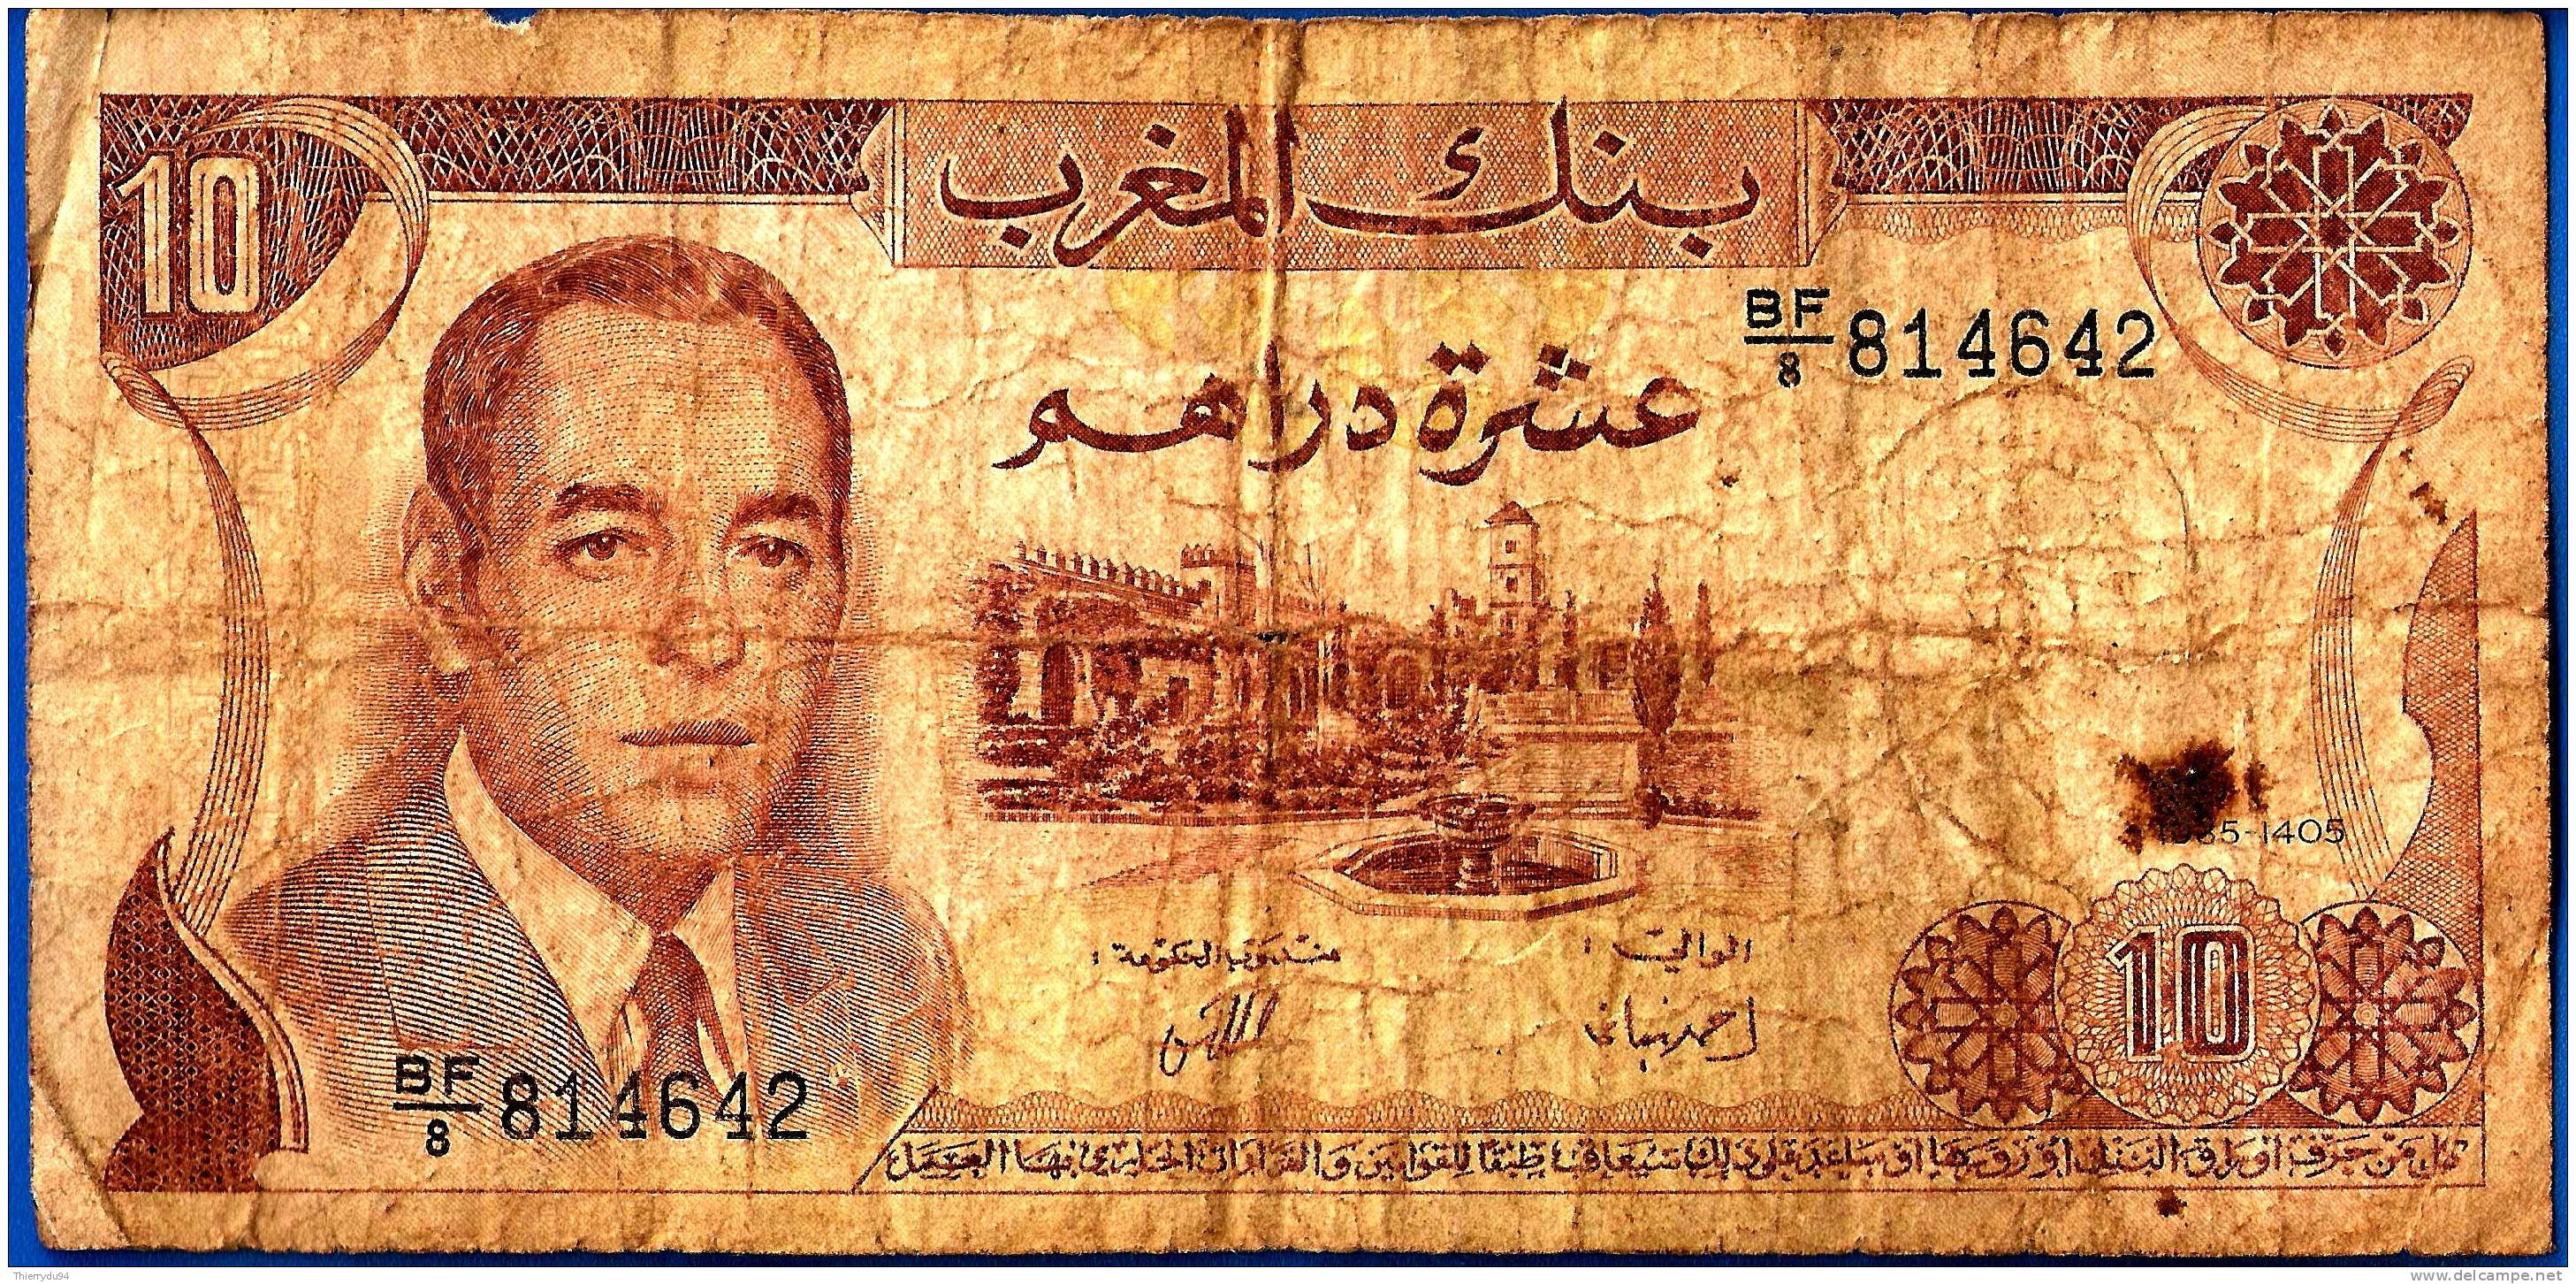 Maroc 10 Dirhams 1985 Signature 9 Morocco Afrique Africa Paypal Moneybookers OK - Marokko